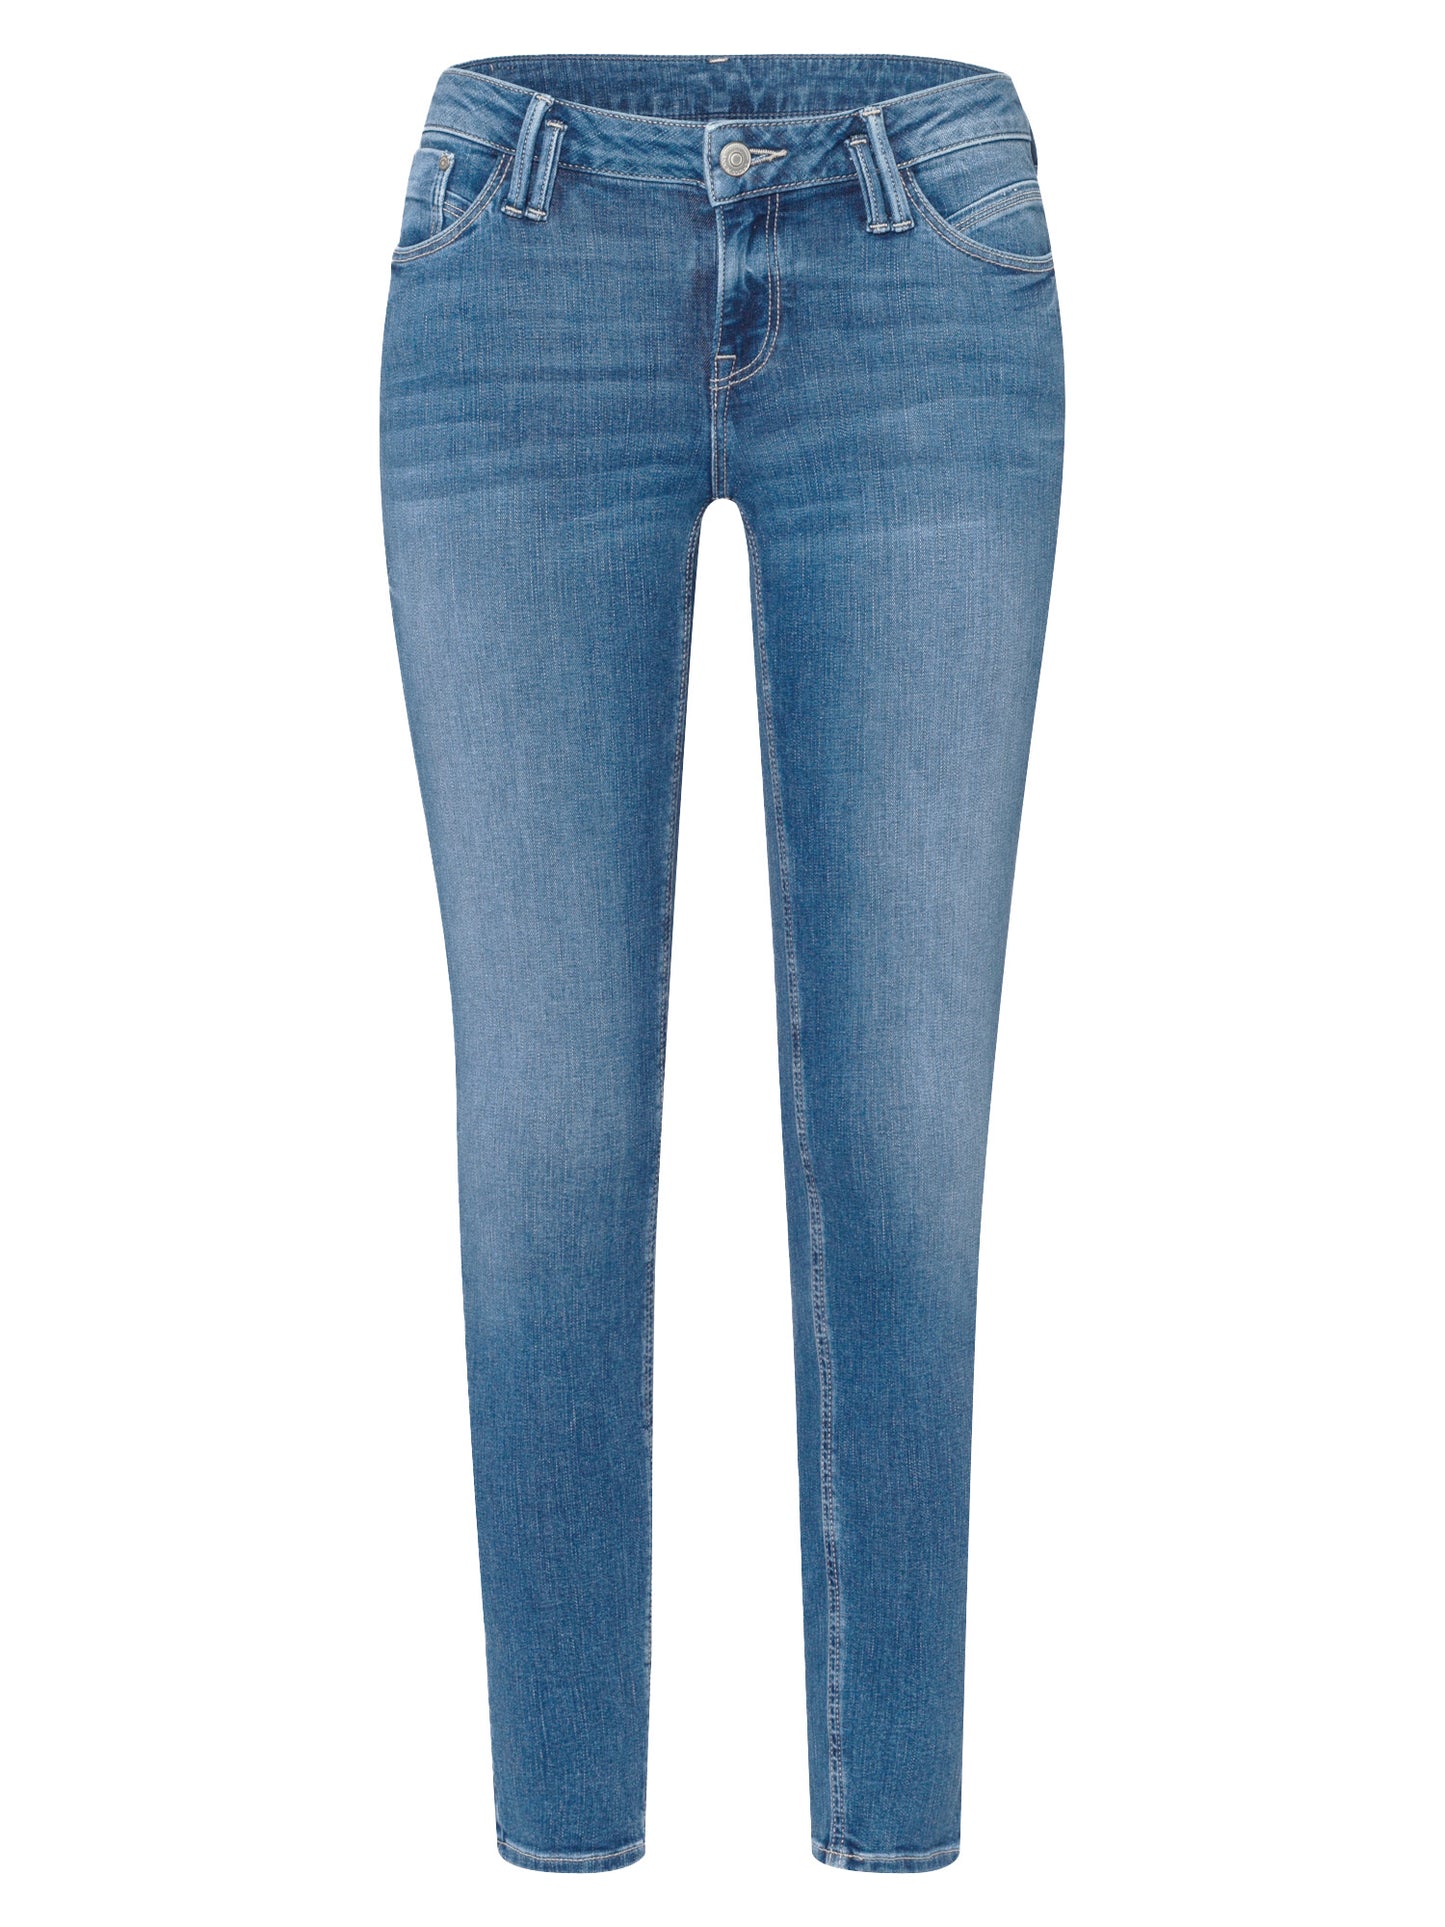 Giselle Damen Jeans Super Skinny Fit Mid Waist Ankle Lenght hellblau